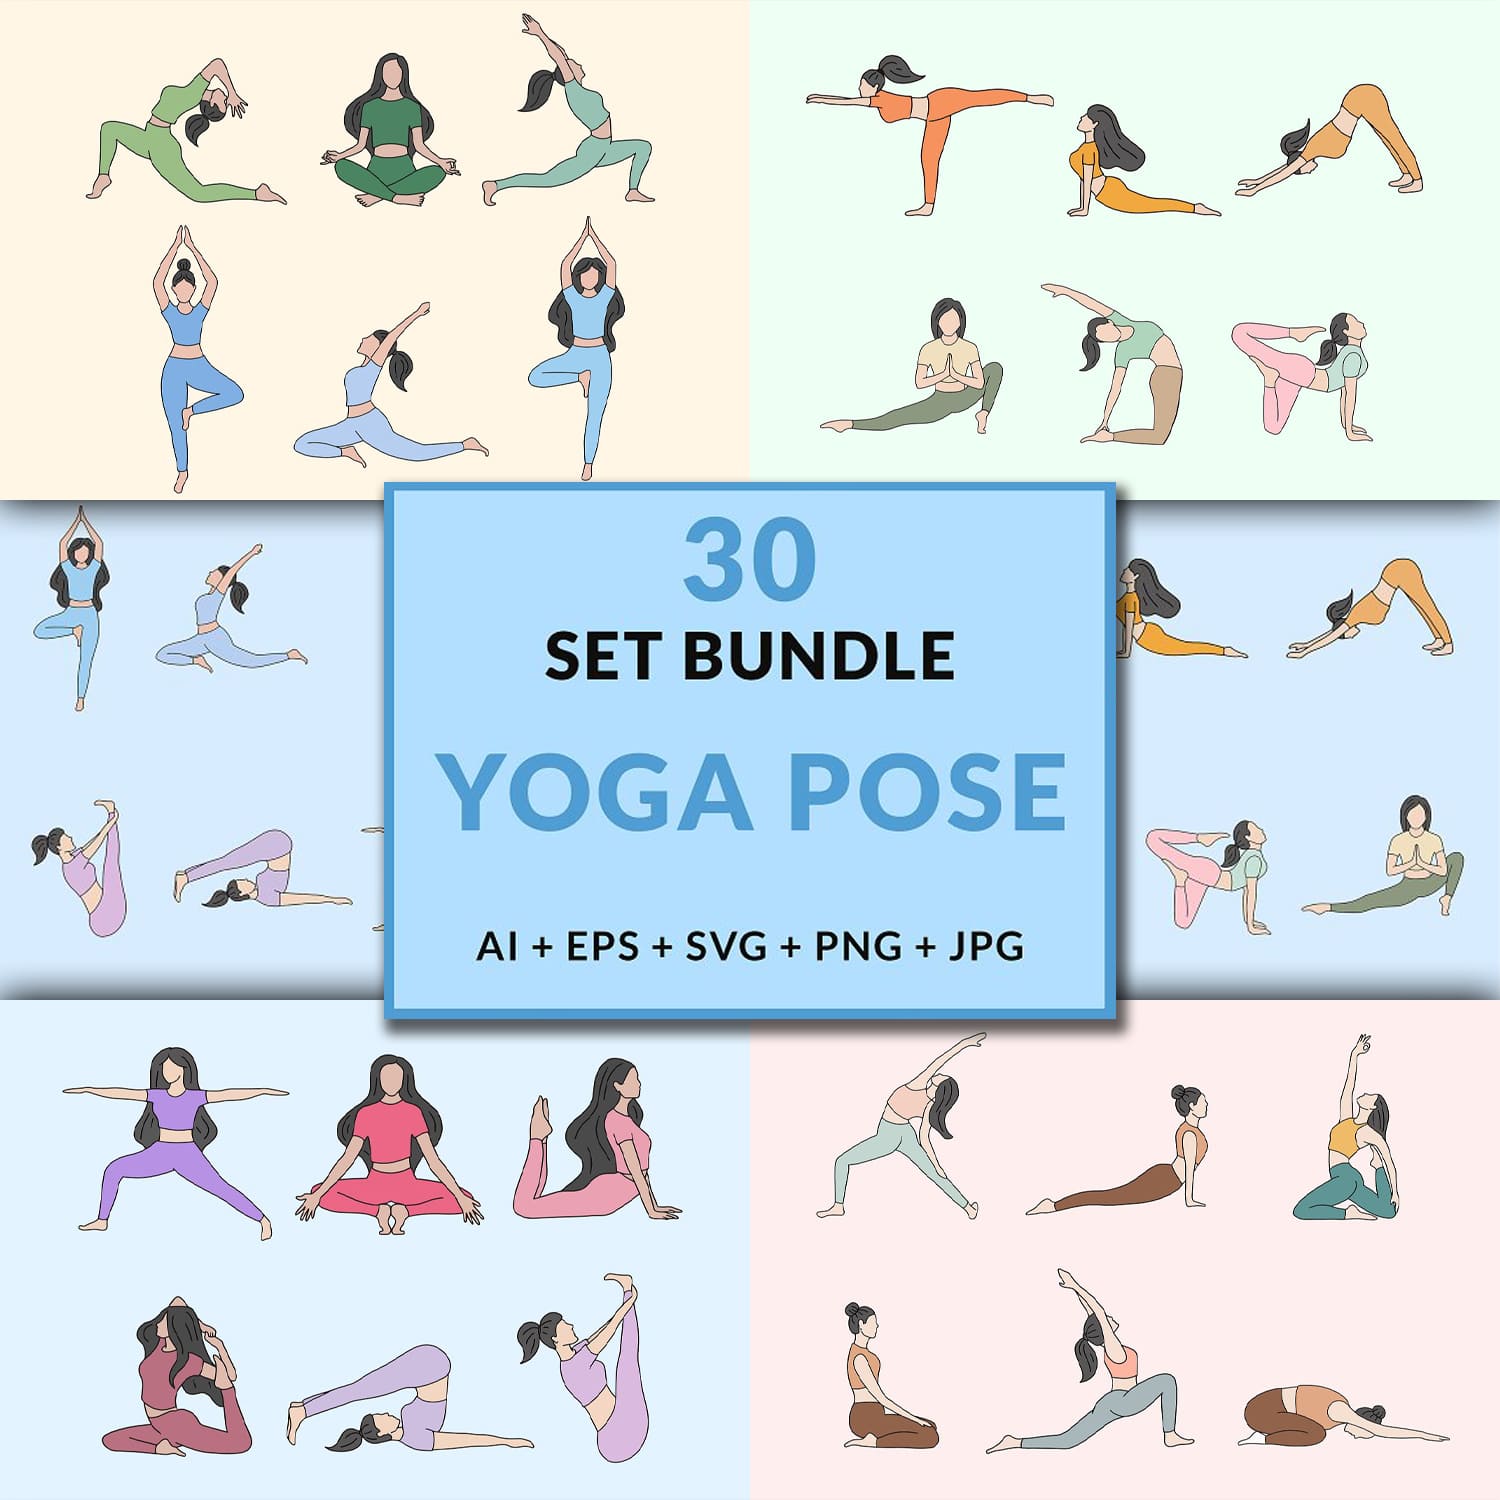 30 Bundle Women Yoga Pose Wellness created by Morspective.